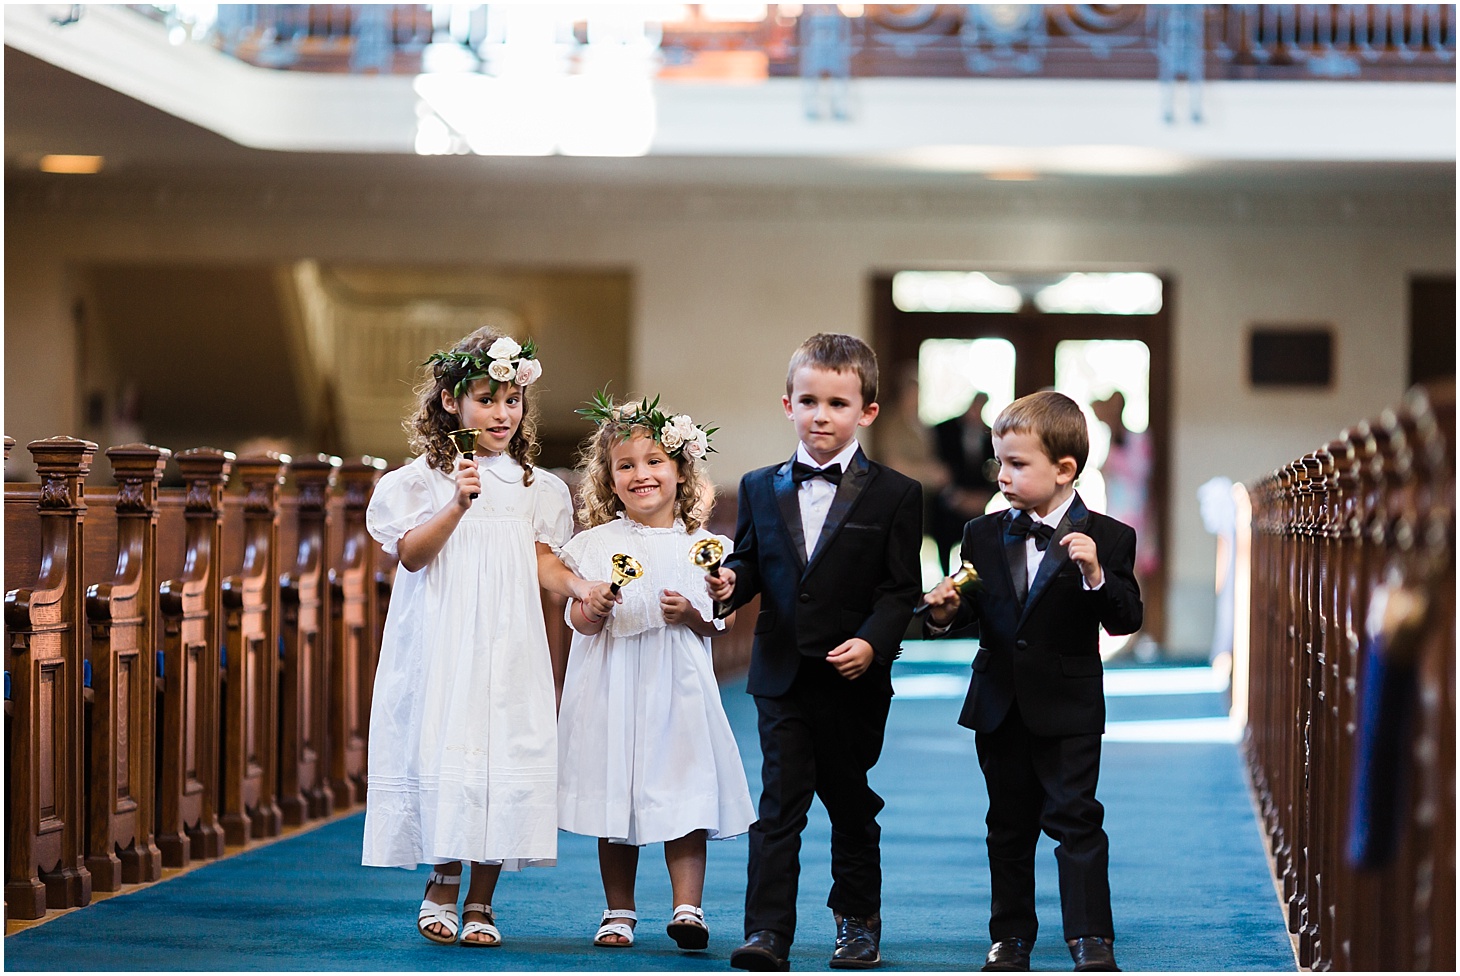 Ring Bearers at US Naval Academy Chapel Wedding | Southern Magnolia Wedding at the Naval Academy and Gibson Island Club | Sarah Bradshaw Photography